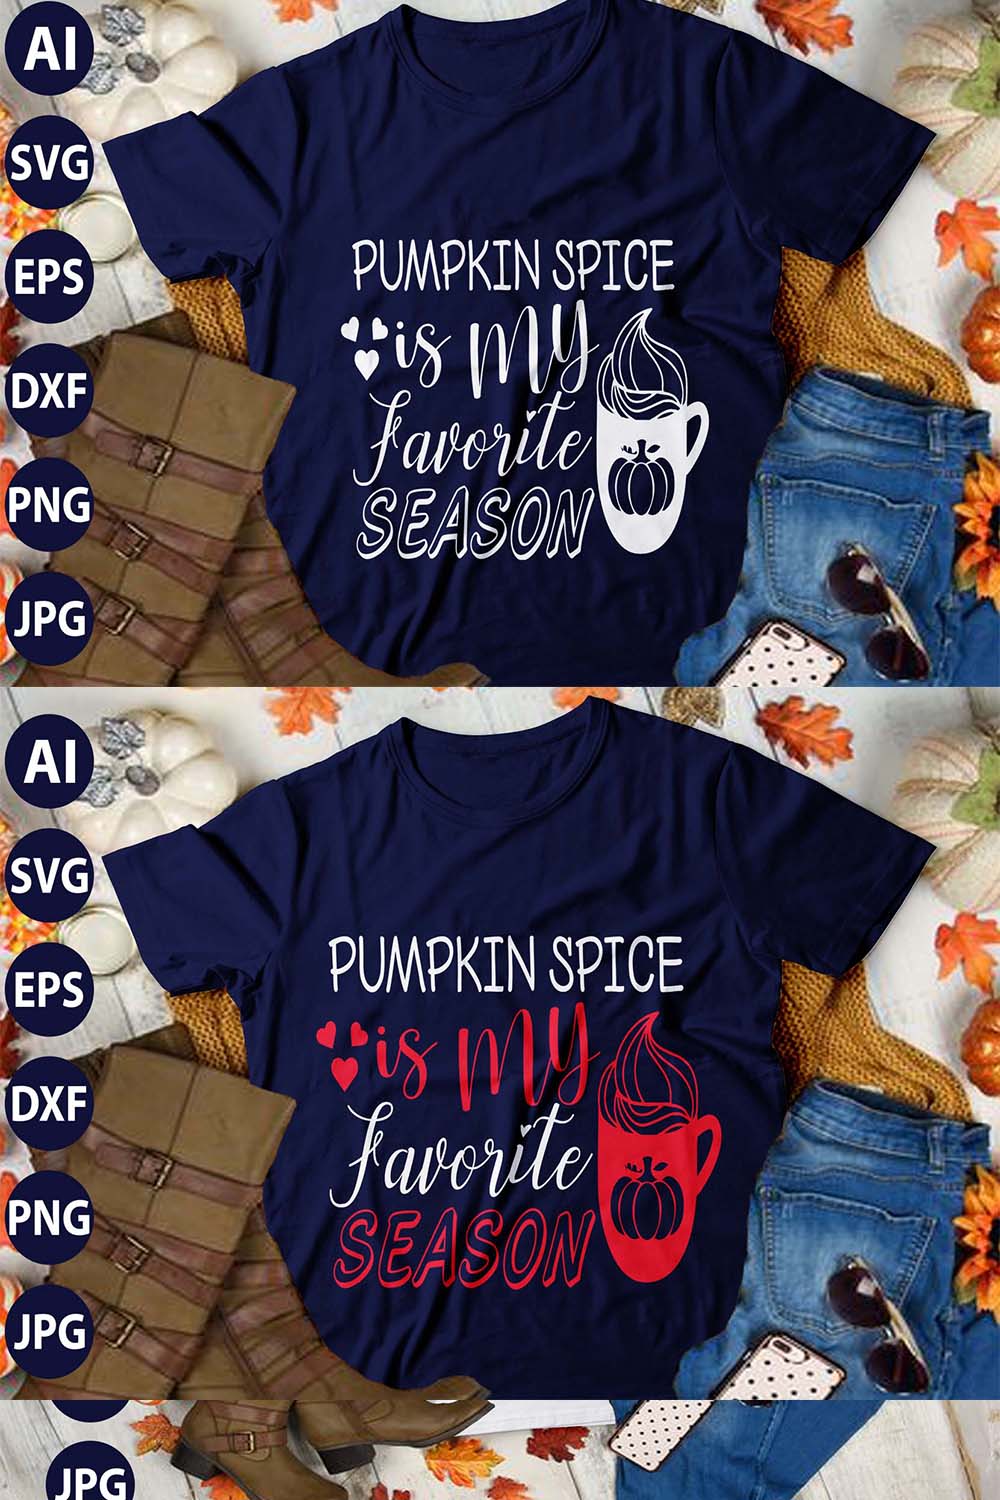 Pumpkin Spice is my Favorite Season, SVG T-Shirt Design |Happy Halloween & Pumpkin T-Shirt Design | Ai, Svg, Eps, Dxf, Jpeg, Png, Instant download T-Shirt | 100% print-ready Digital vector file pinterest preview image.